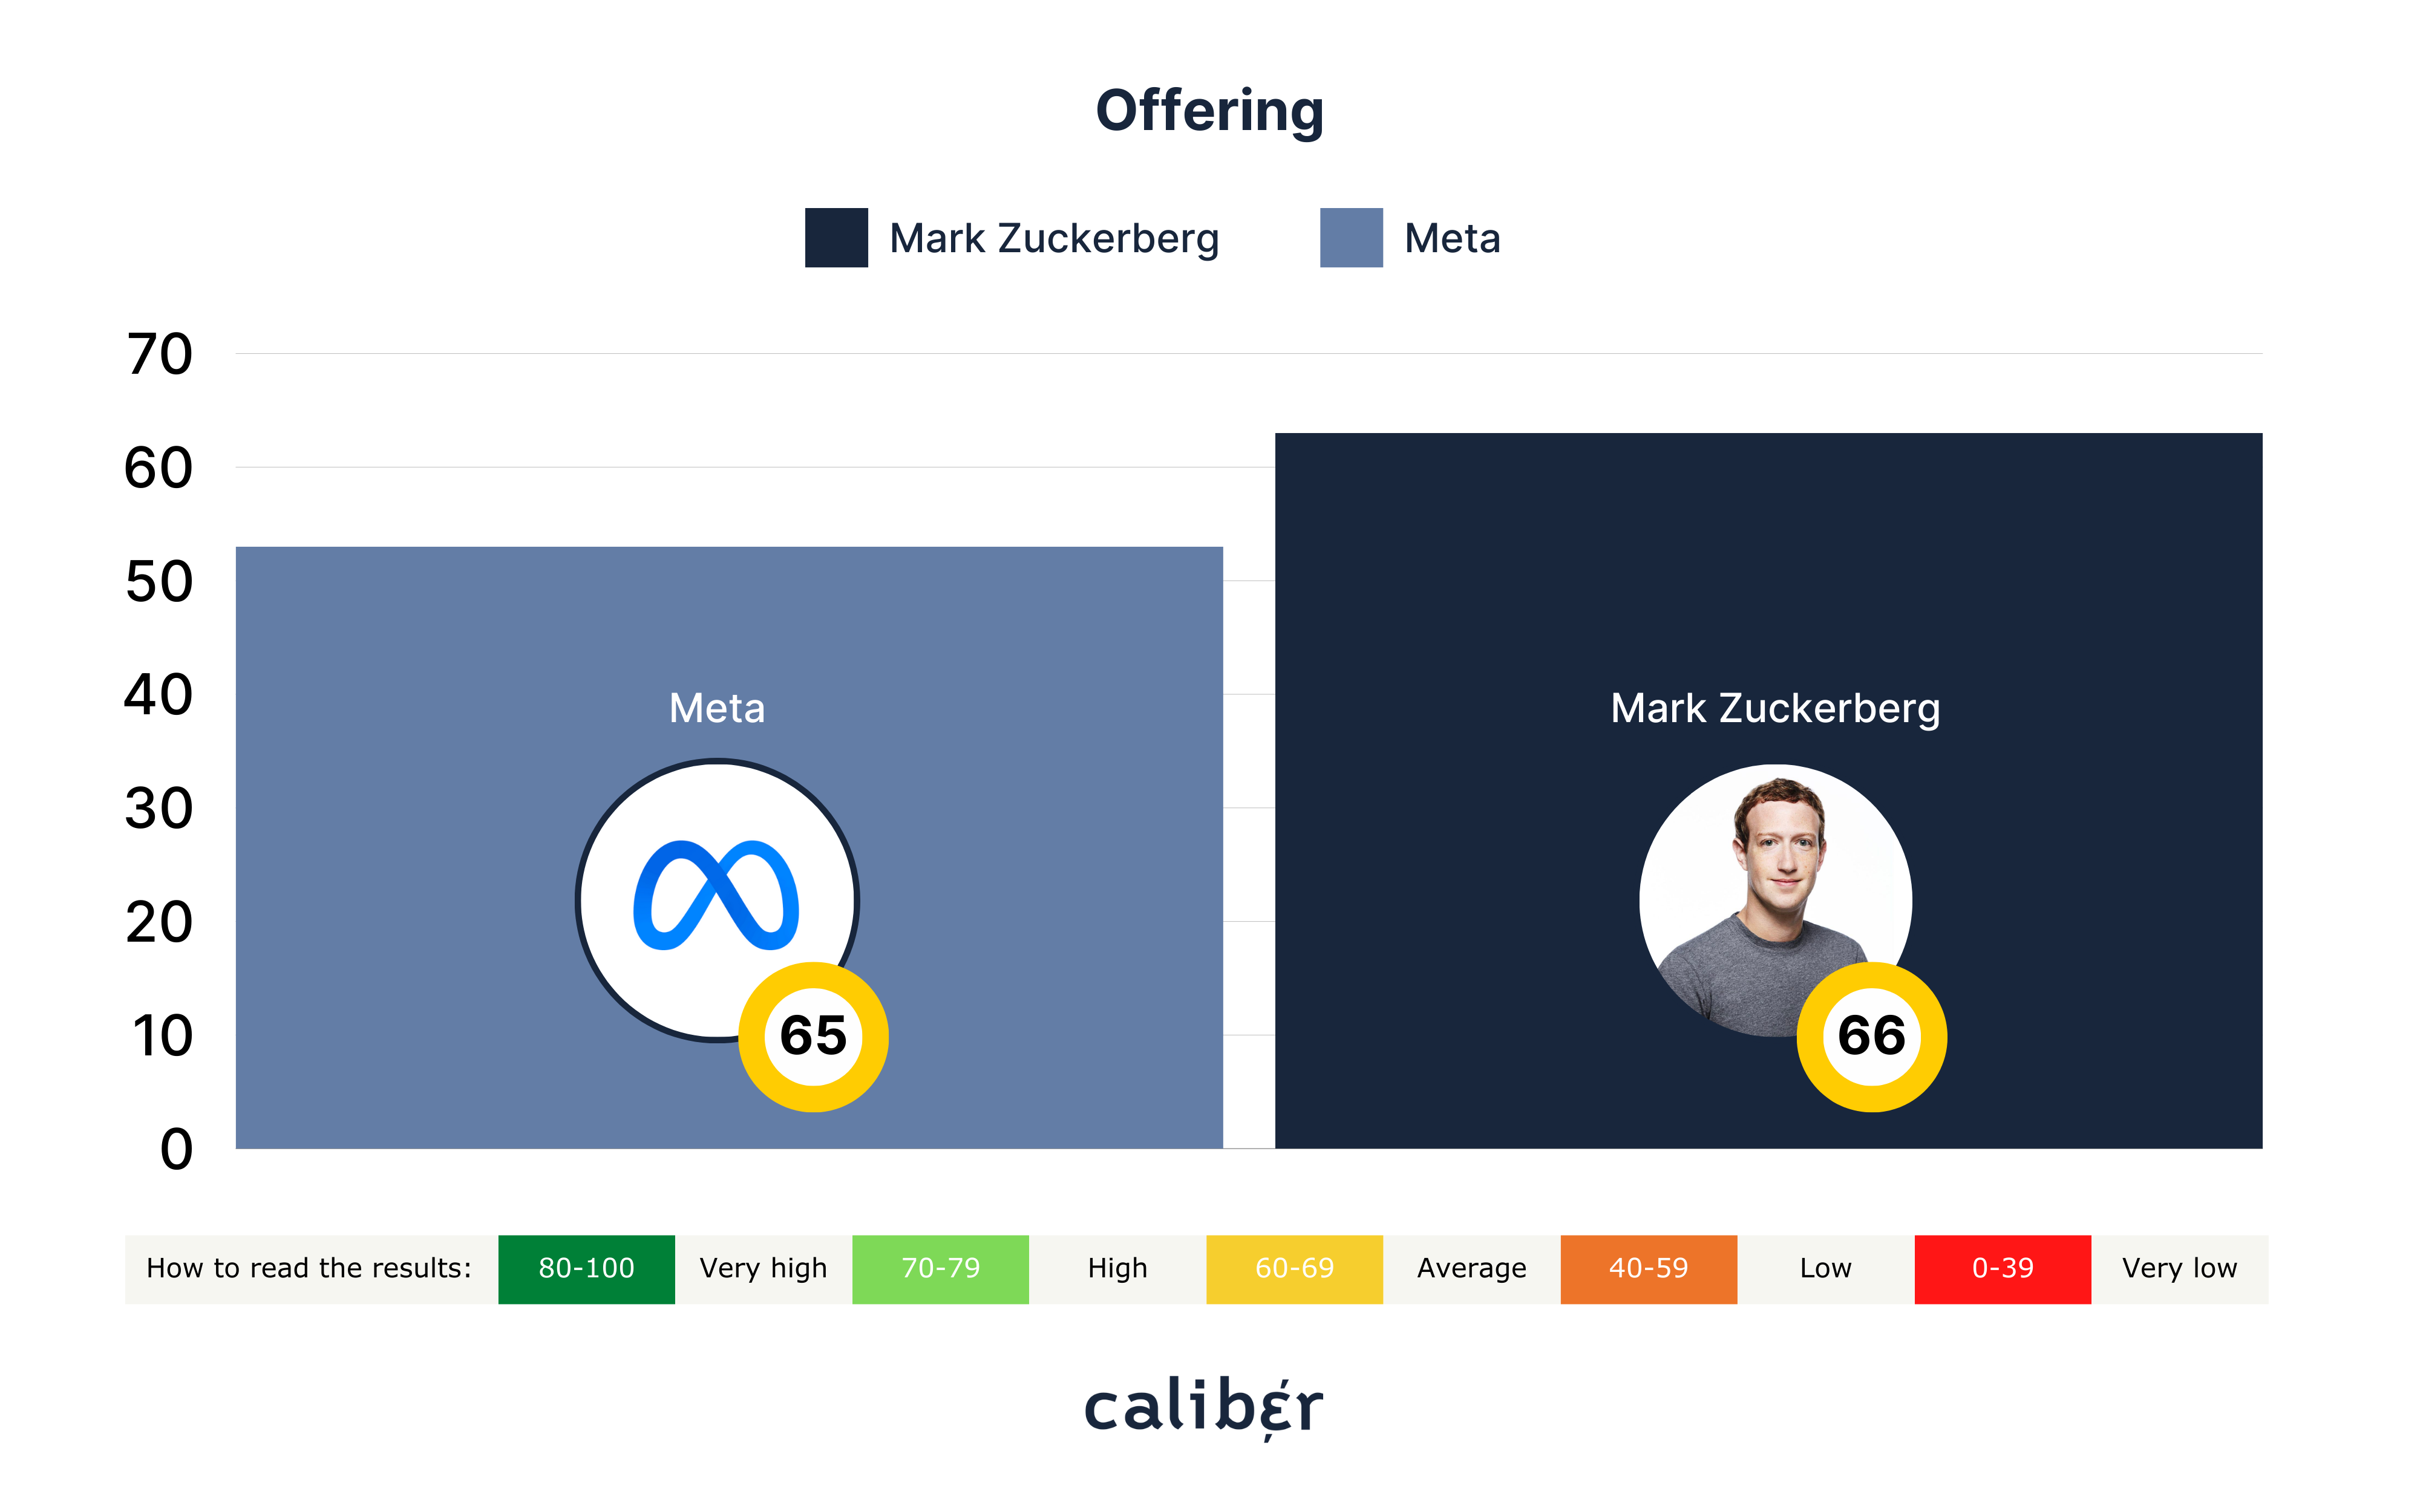 Mark Zuckerberg Offering Score